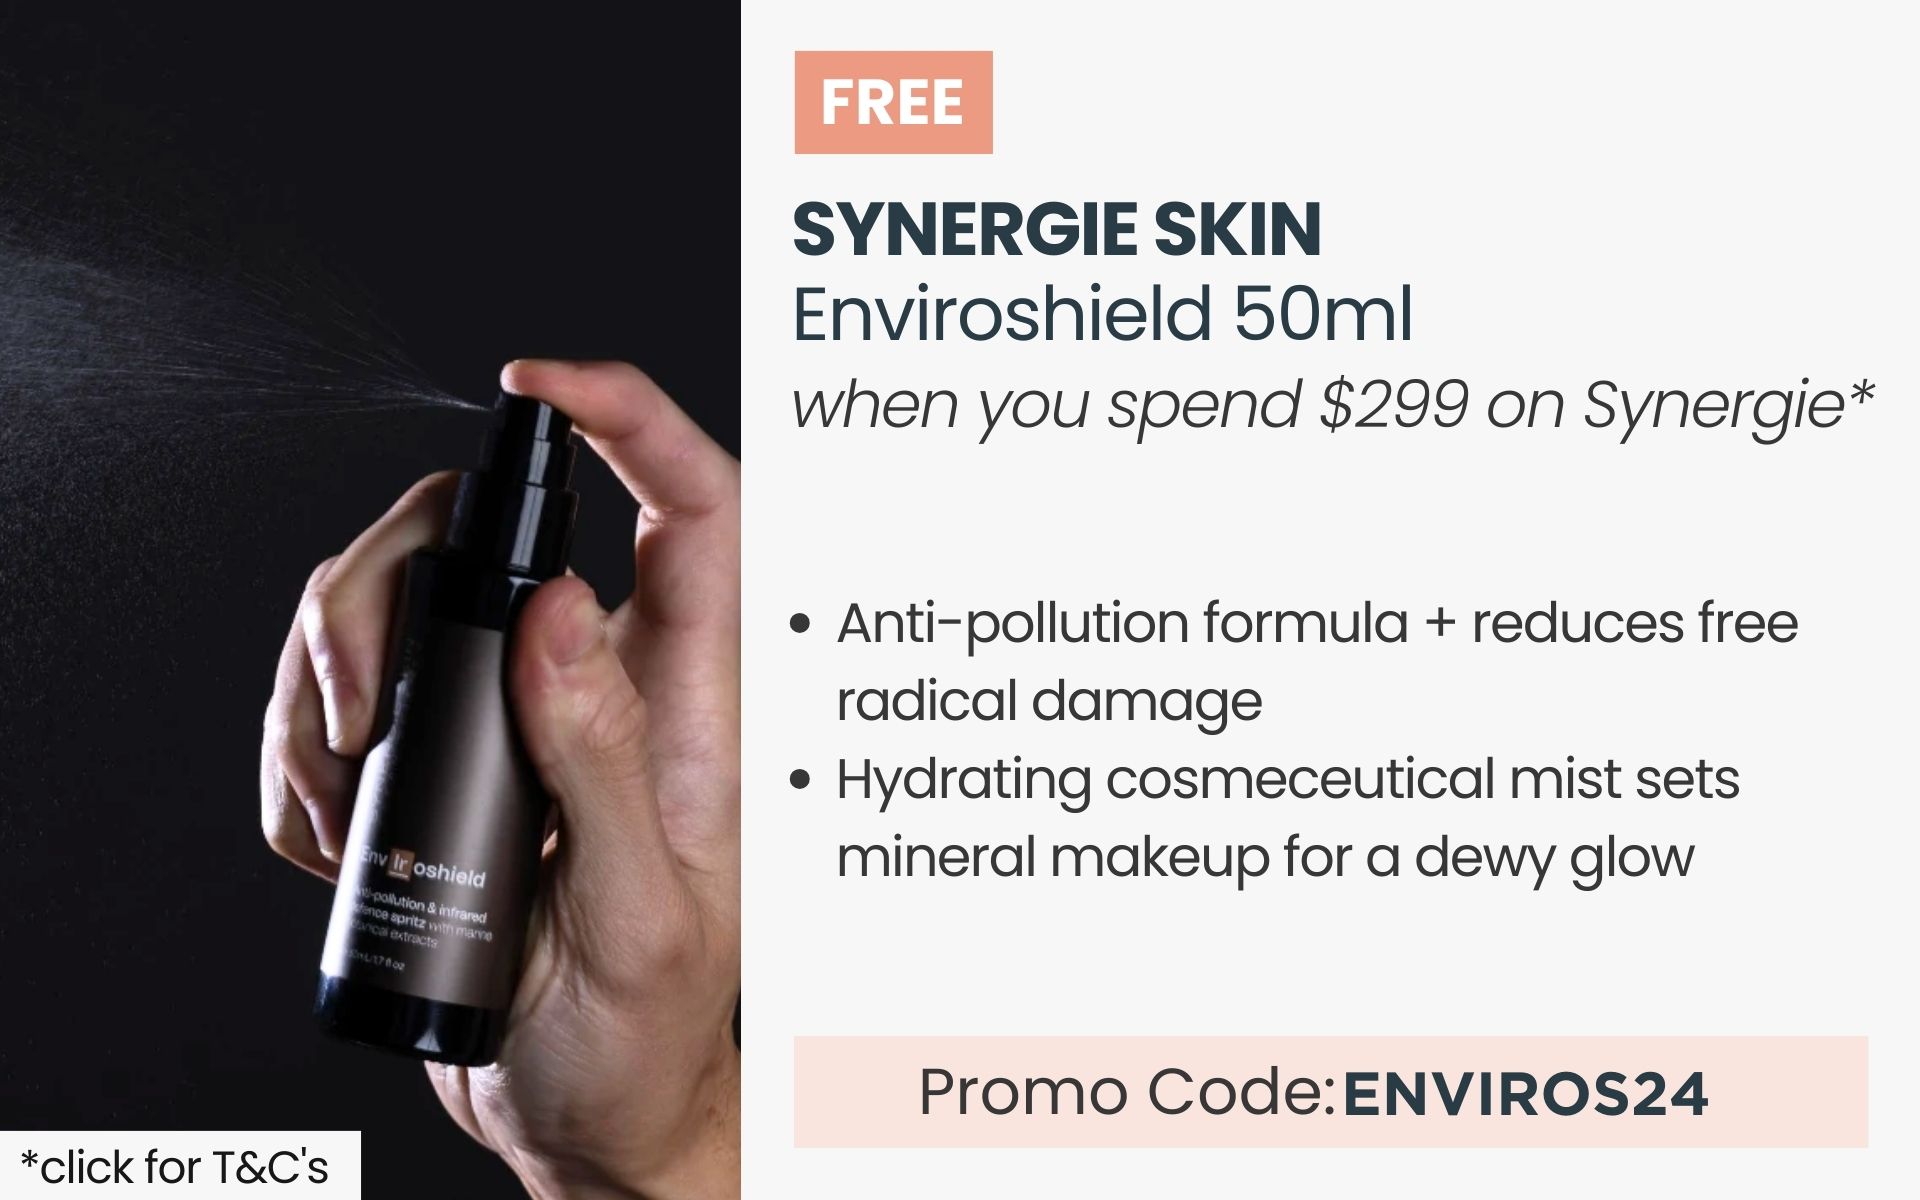 FREE Synergie Skin Enviroshield 50ml worth $99. Min spend $299 on Synergie. Promo Code: ENVIROS24